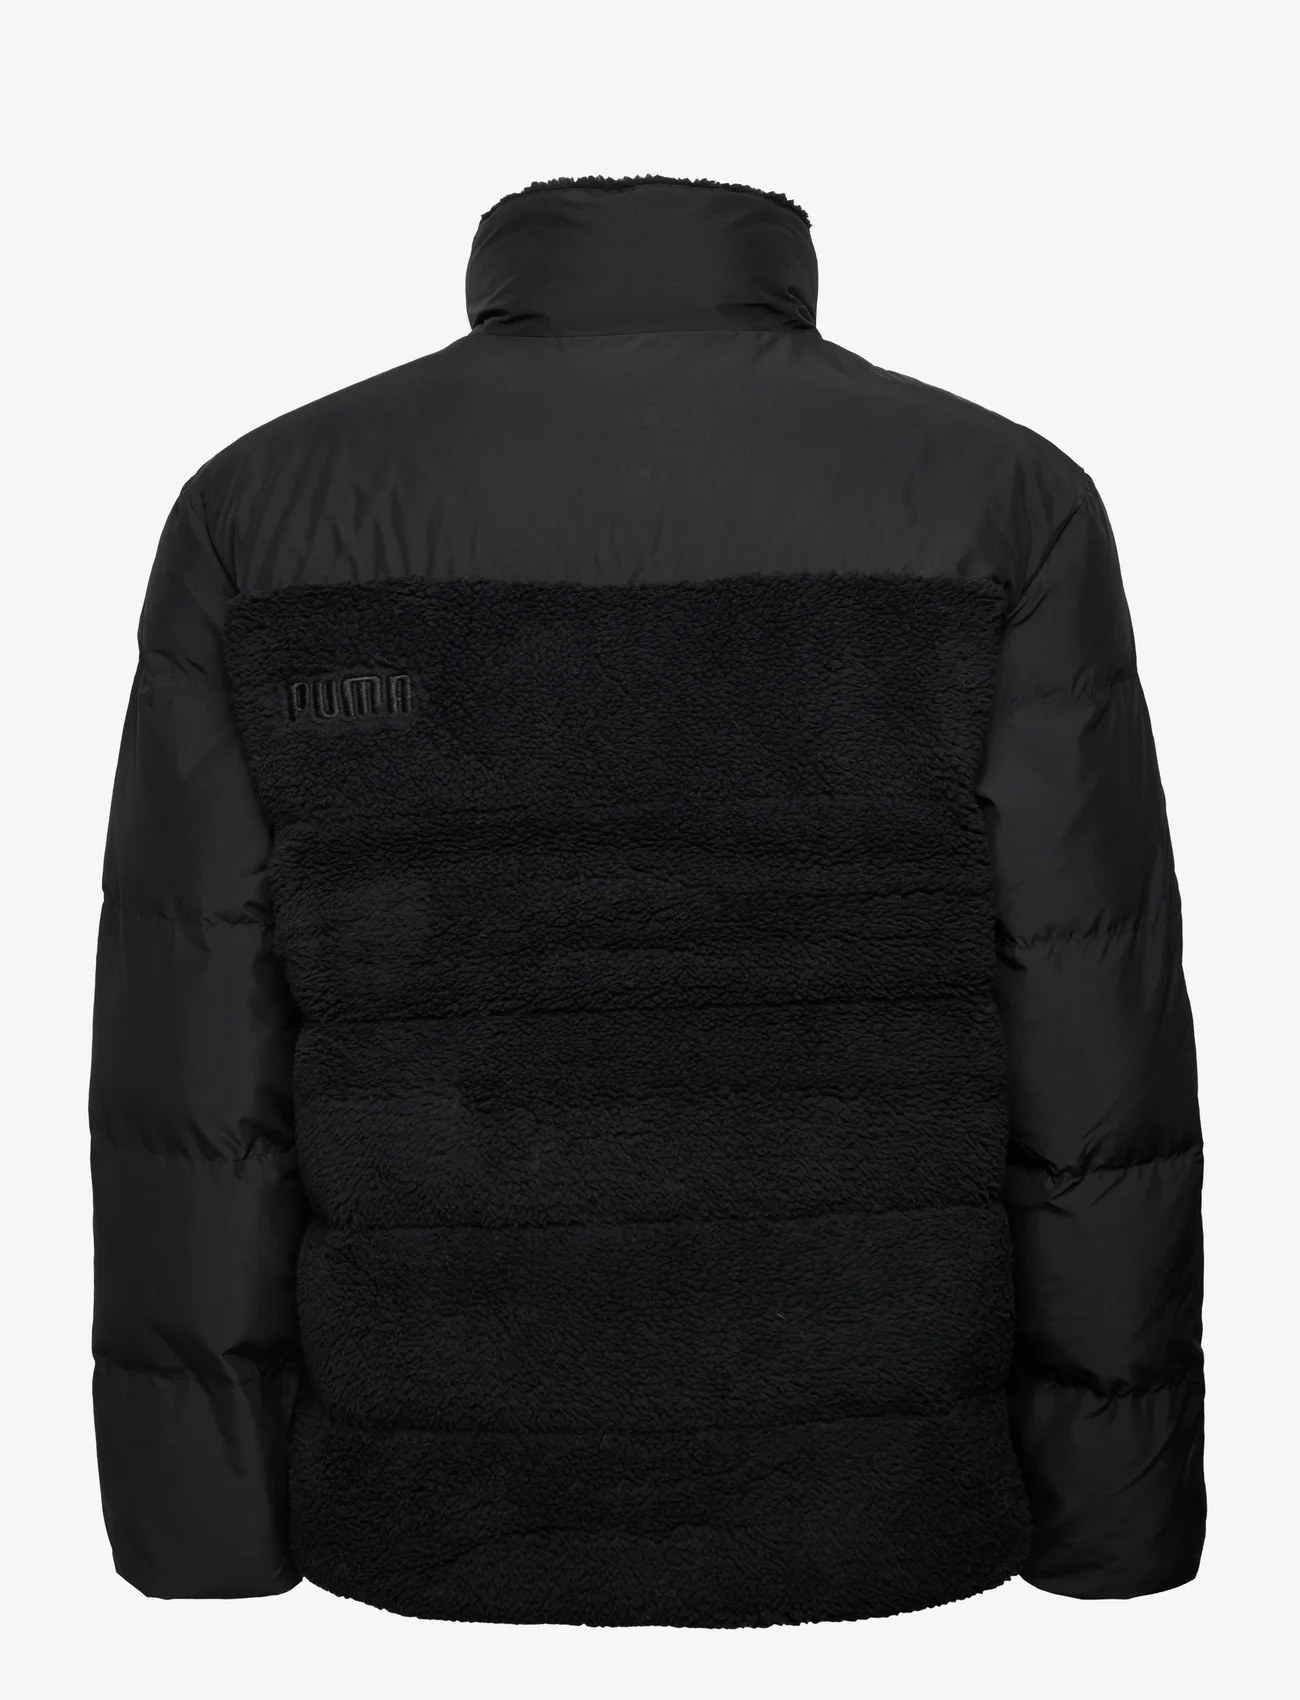 PUMA - Sherpa Puffer - mid layer jackets - puma black - 1